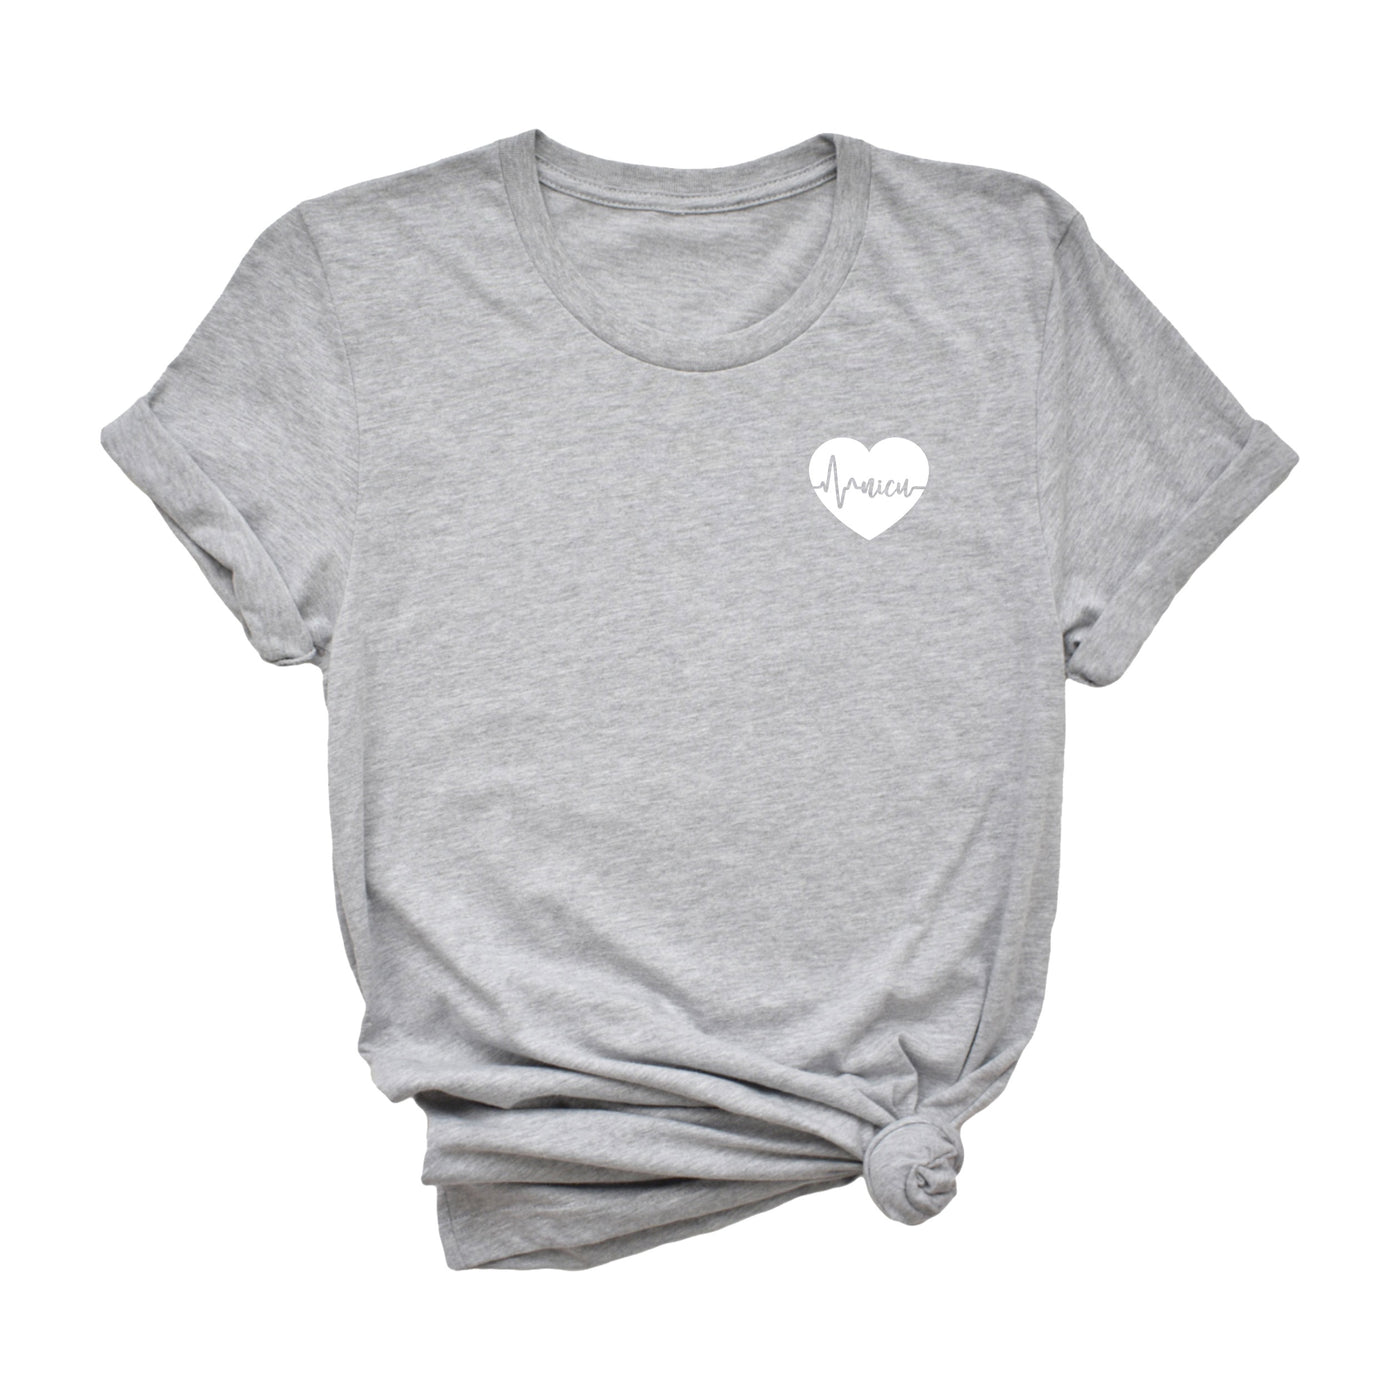 NICU ECG Heart - Shirt